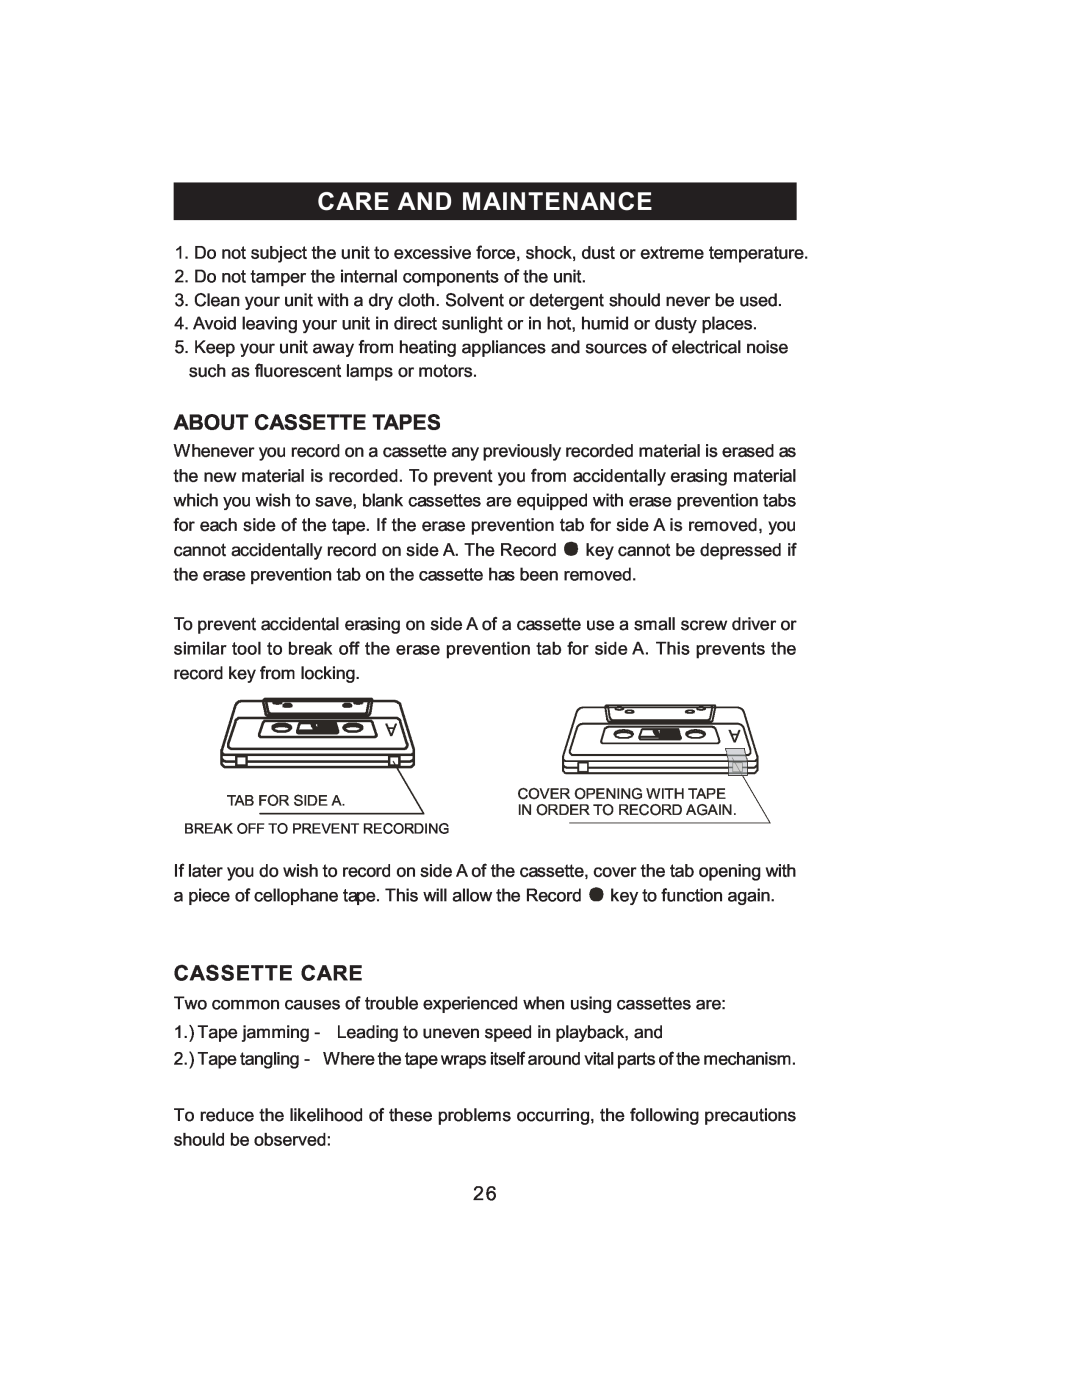 Jensen JMC-1000 manual Care And Maintenance, About Cassette Tapes, Cassette Care 